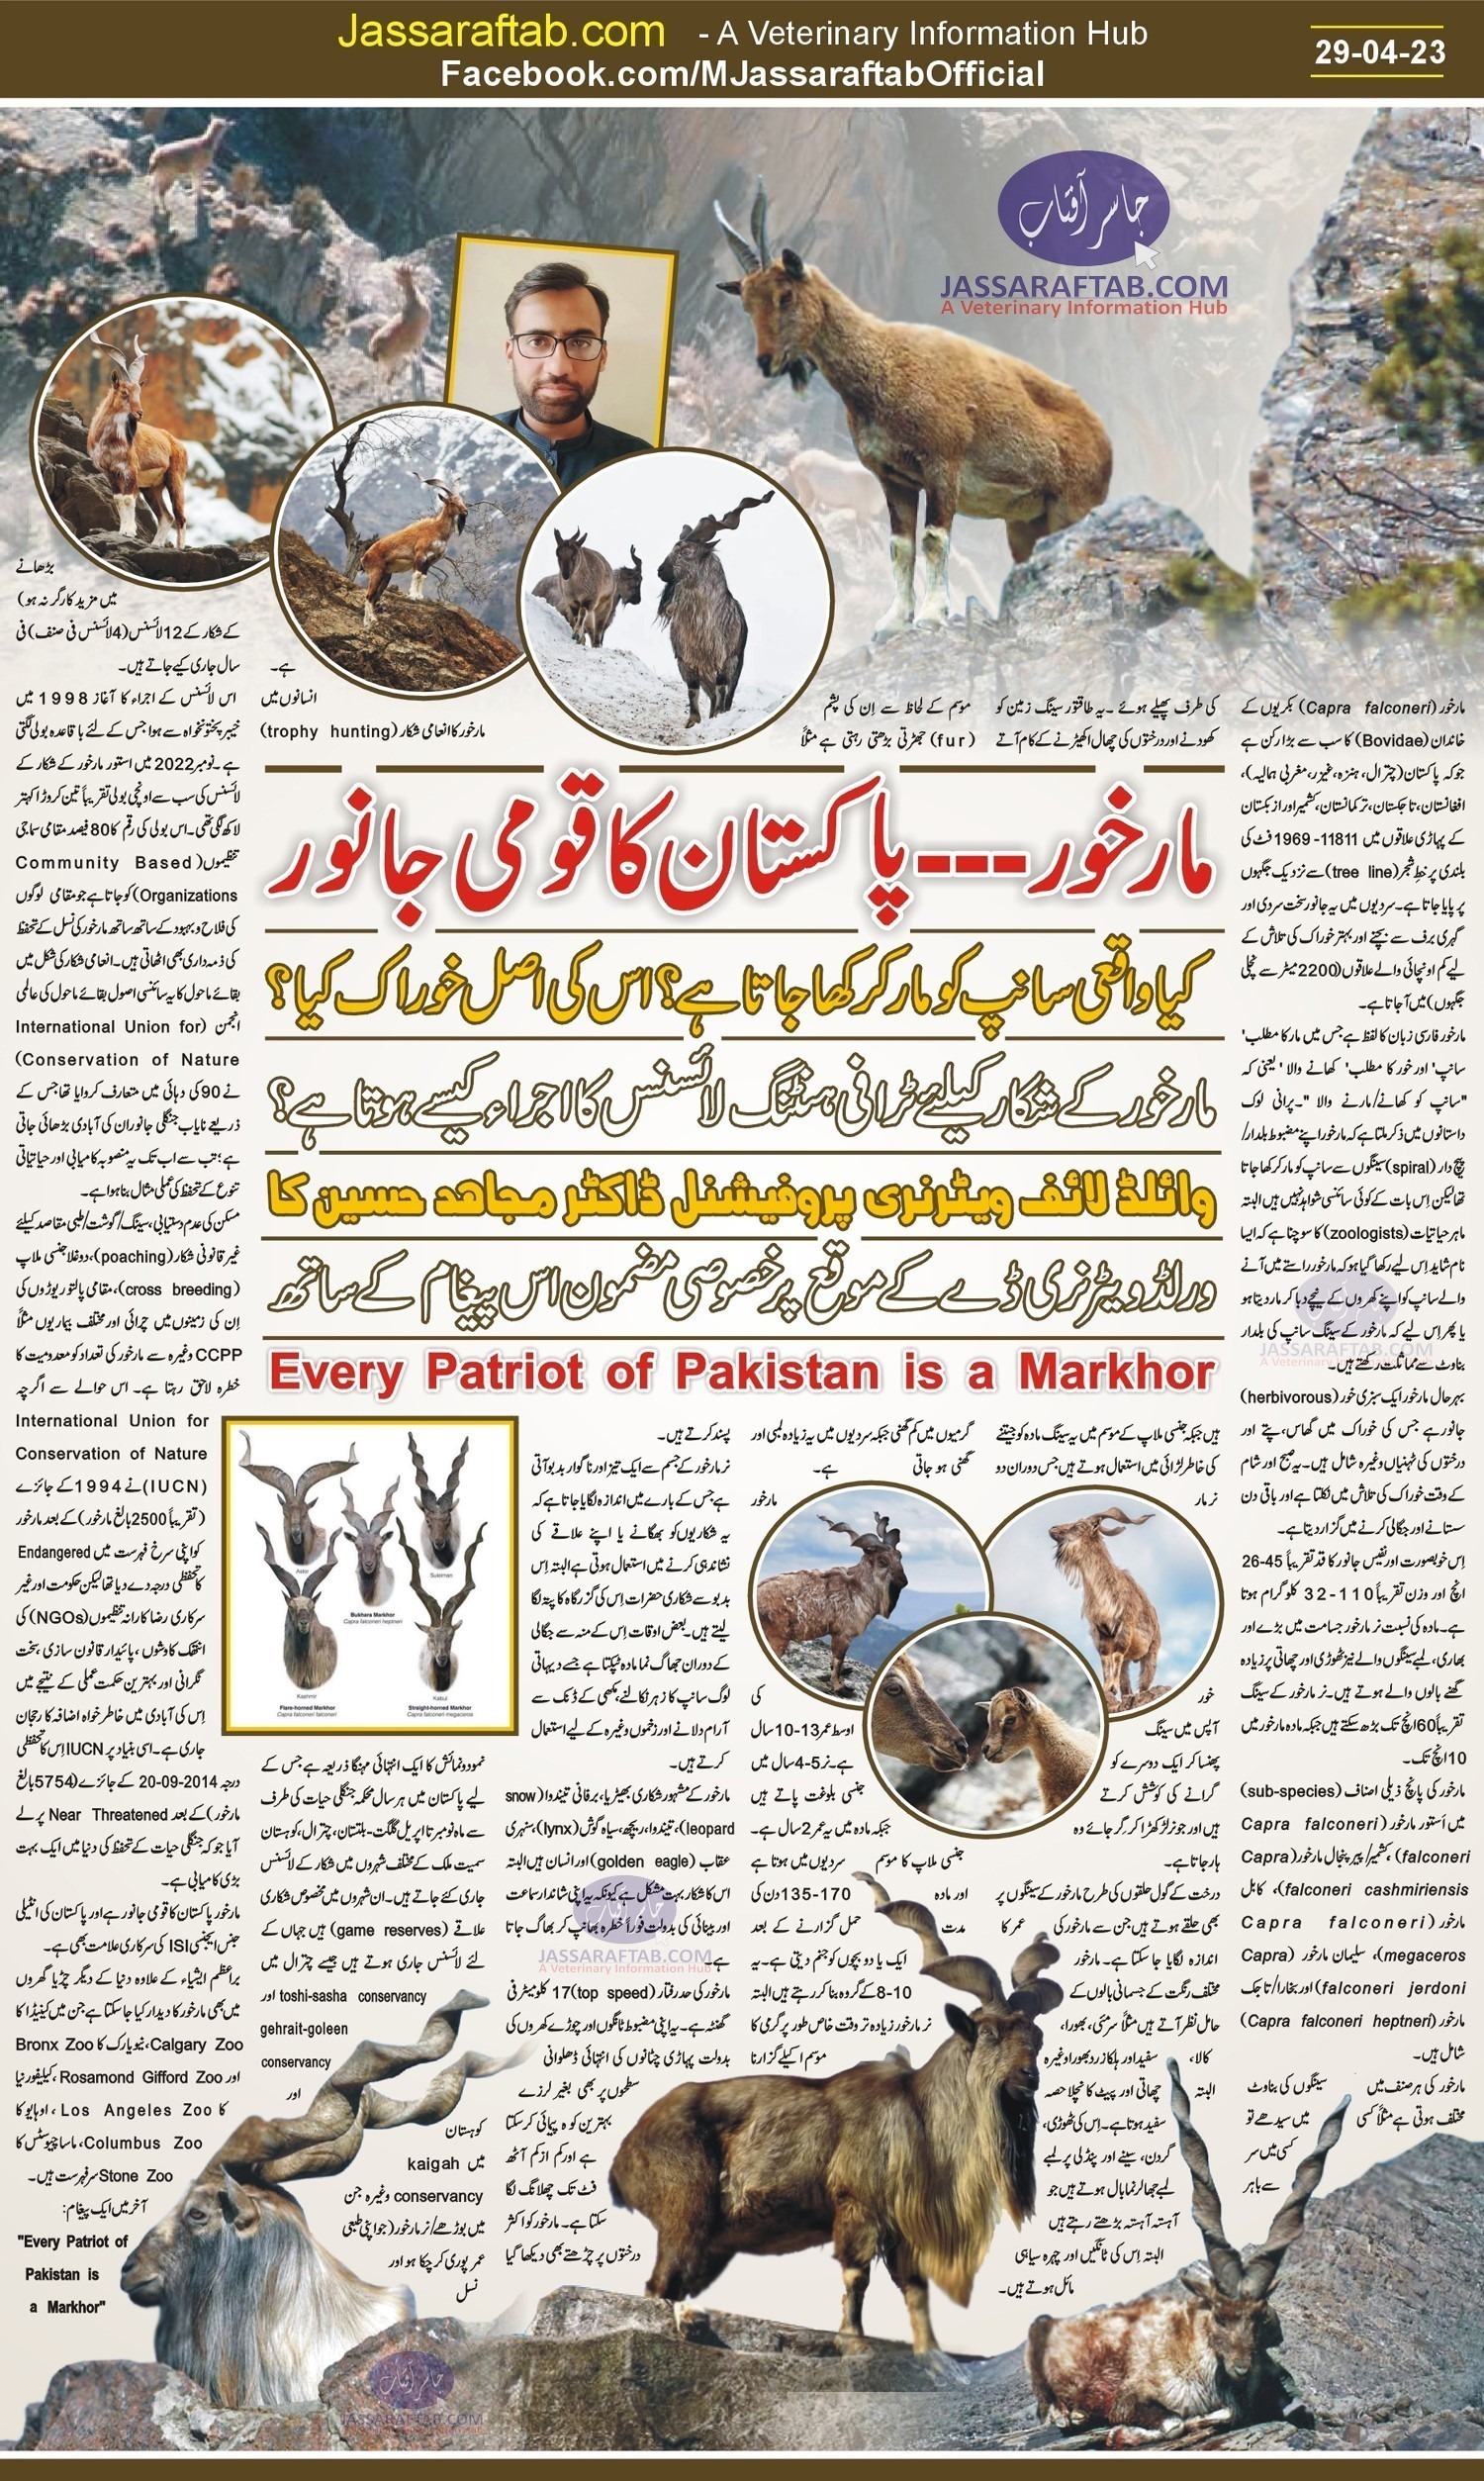 Markhor in Pakistan, types of Markhor, Markhor habitat. Markhor meaning in Urdu